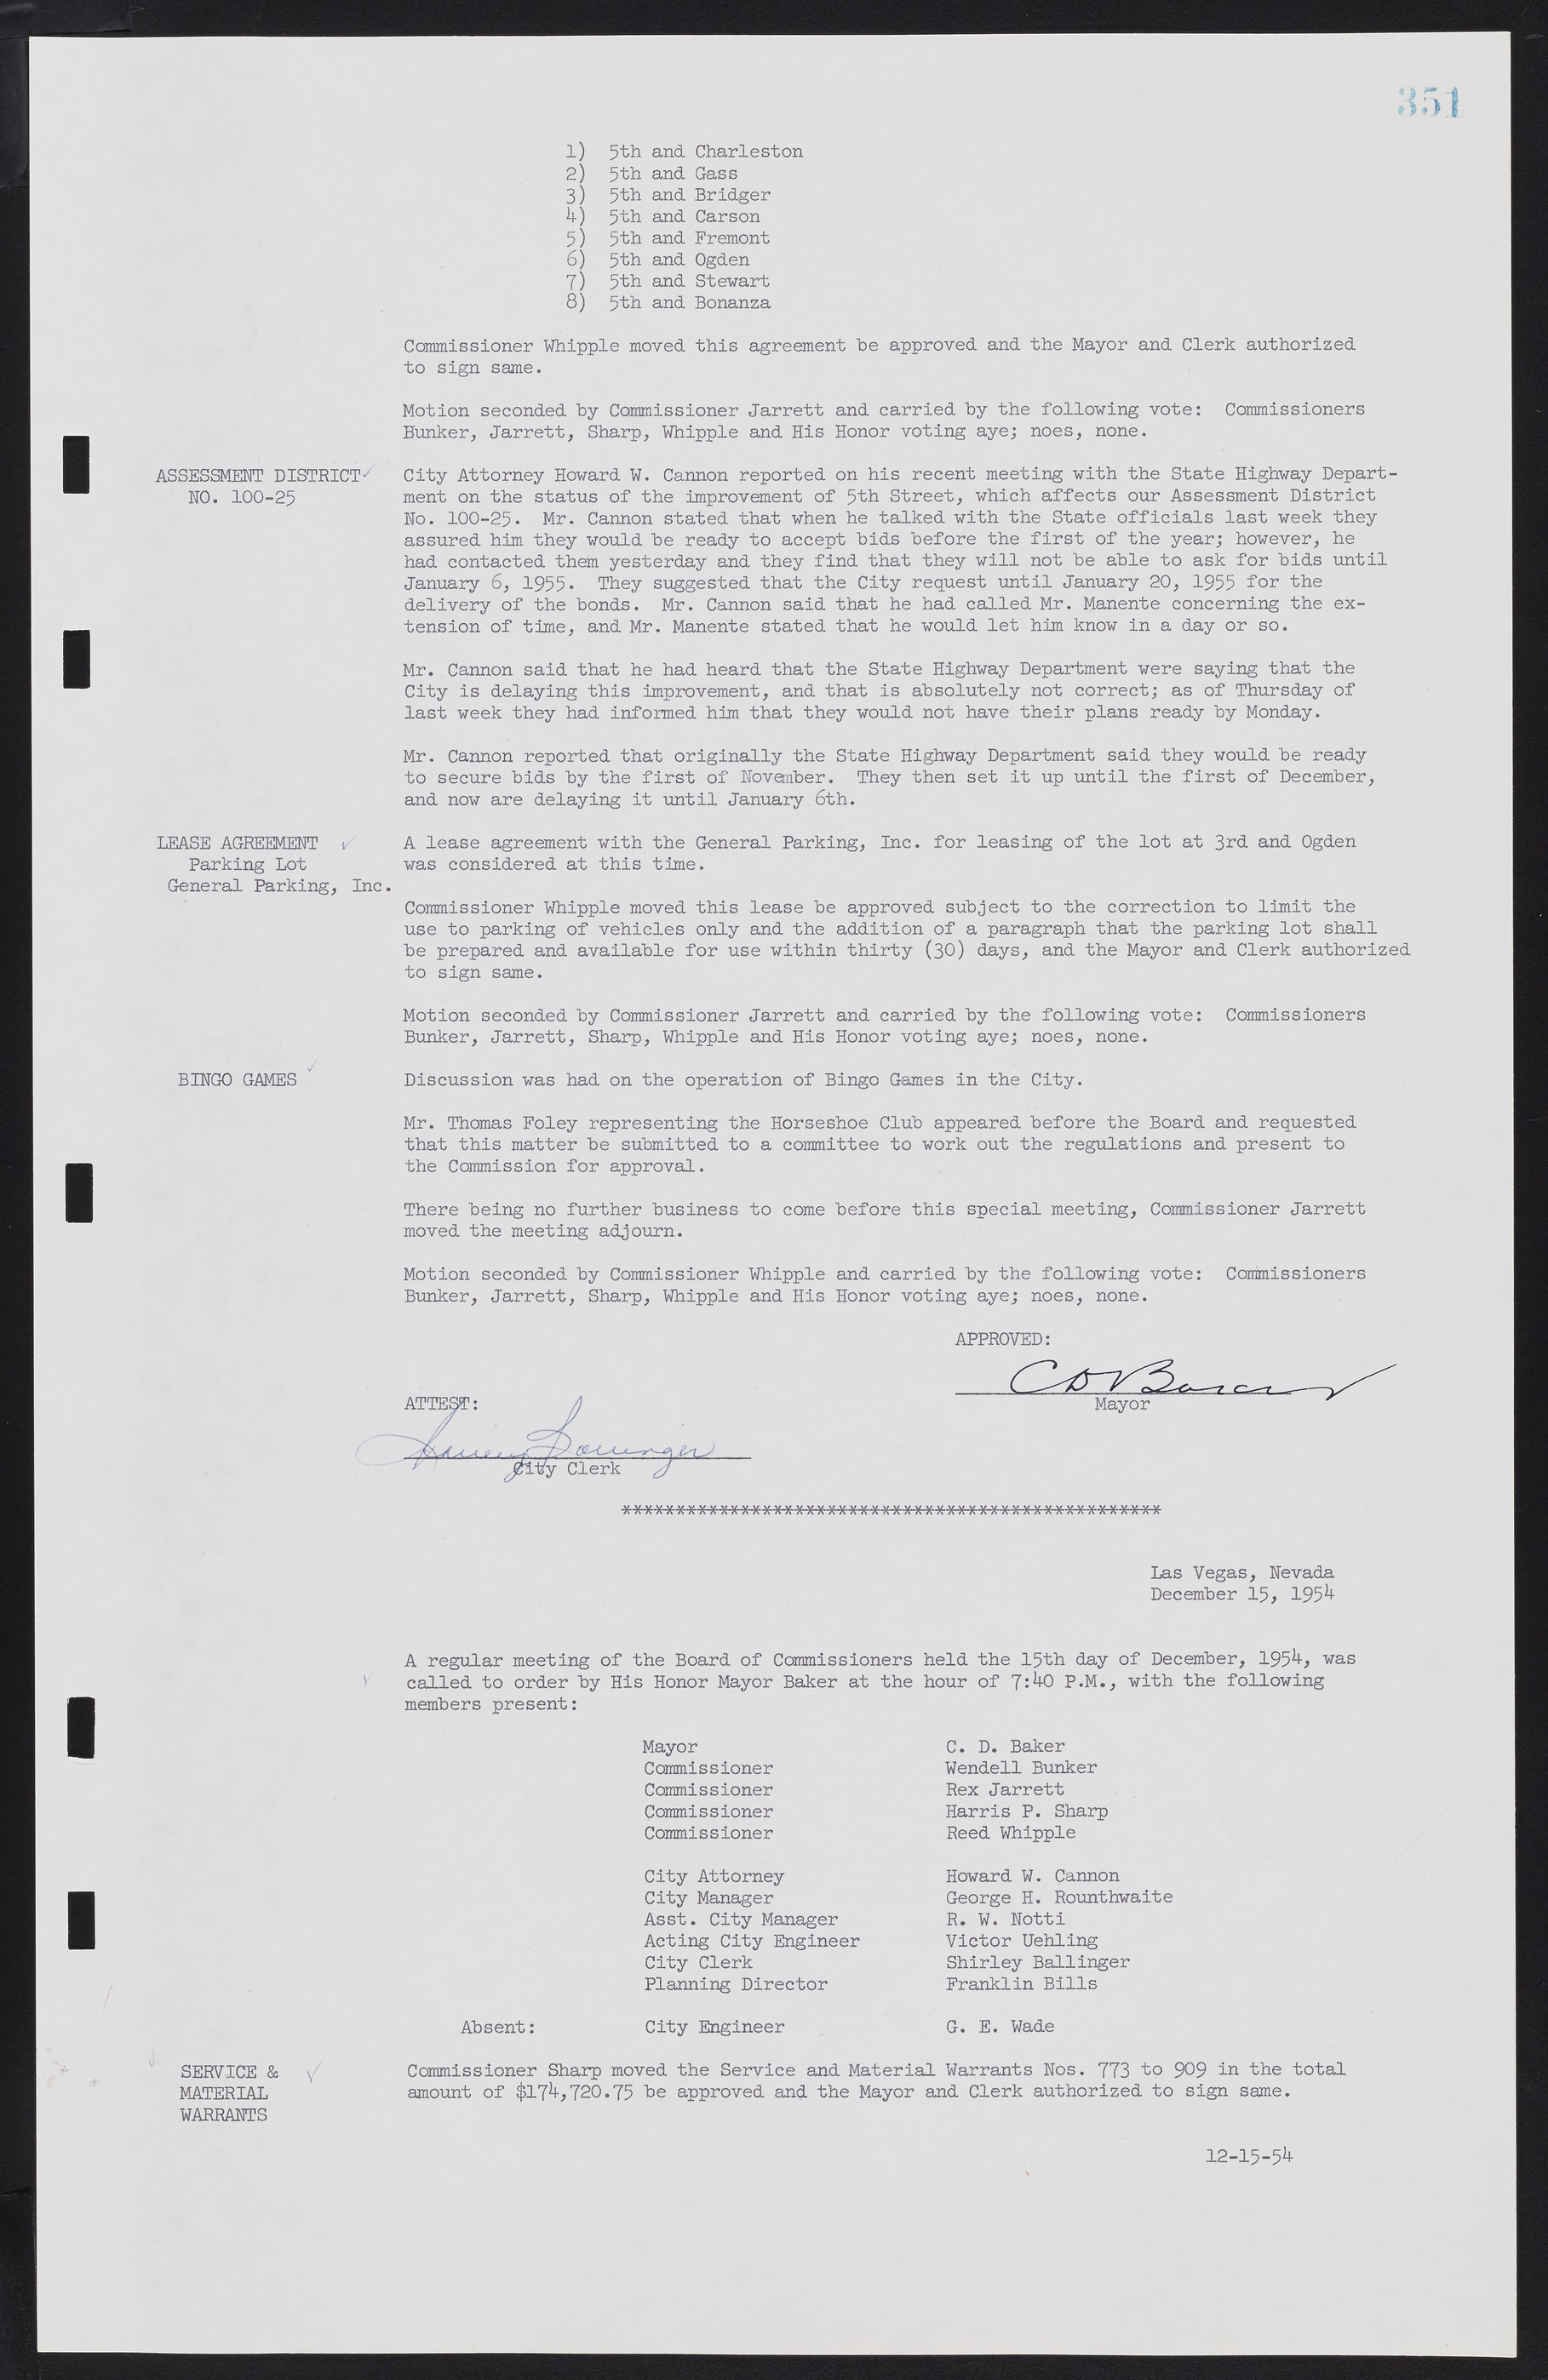 Las Vegas City Commission Minutes, February 17, 1954 to September 21, 1955, lvc000009-357